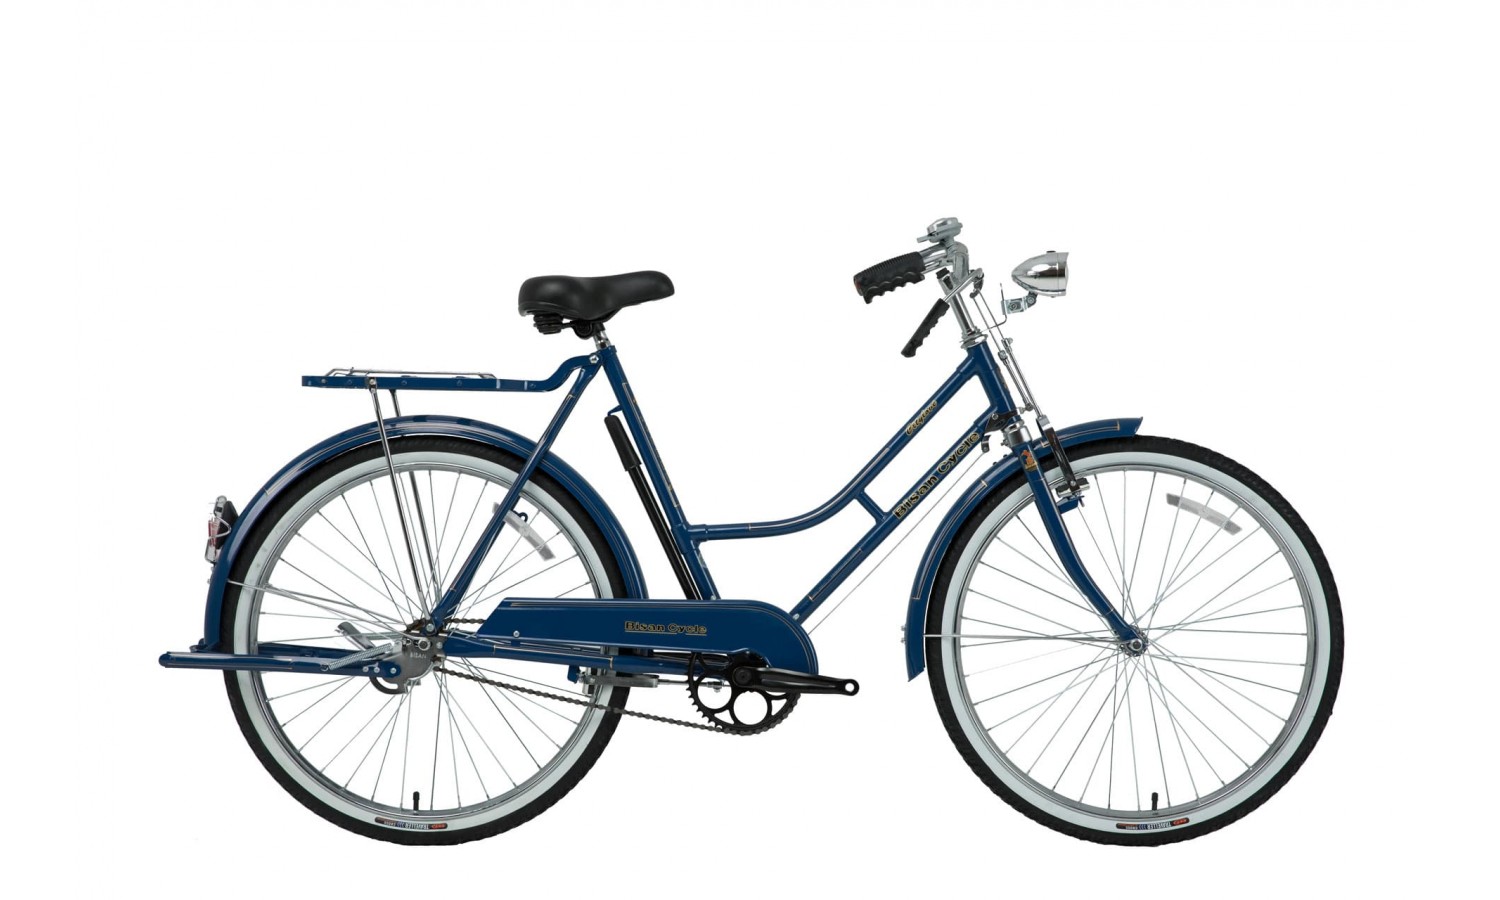 Bisan Roadstar Classic Bayan Hizmet Bisikleti (Mavi)